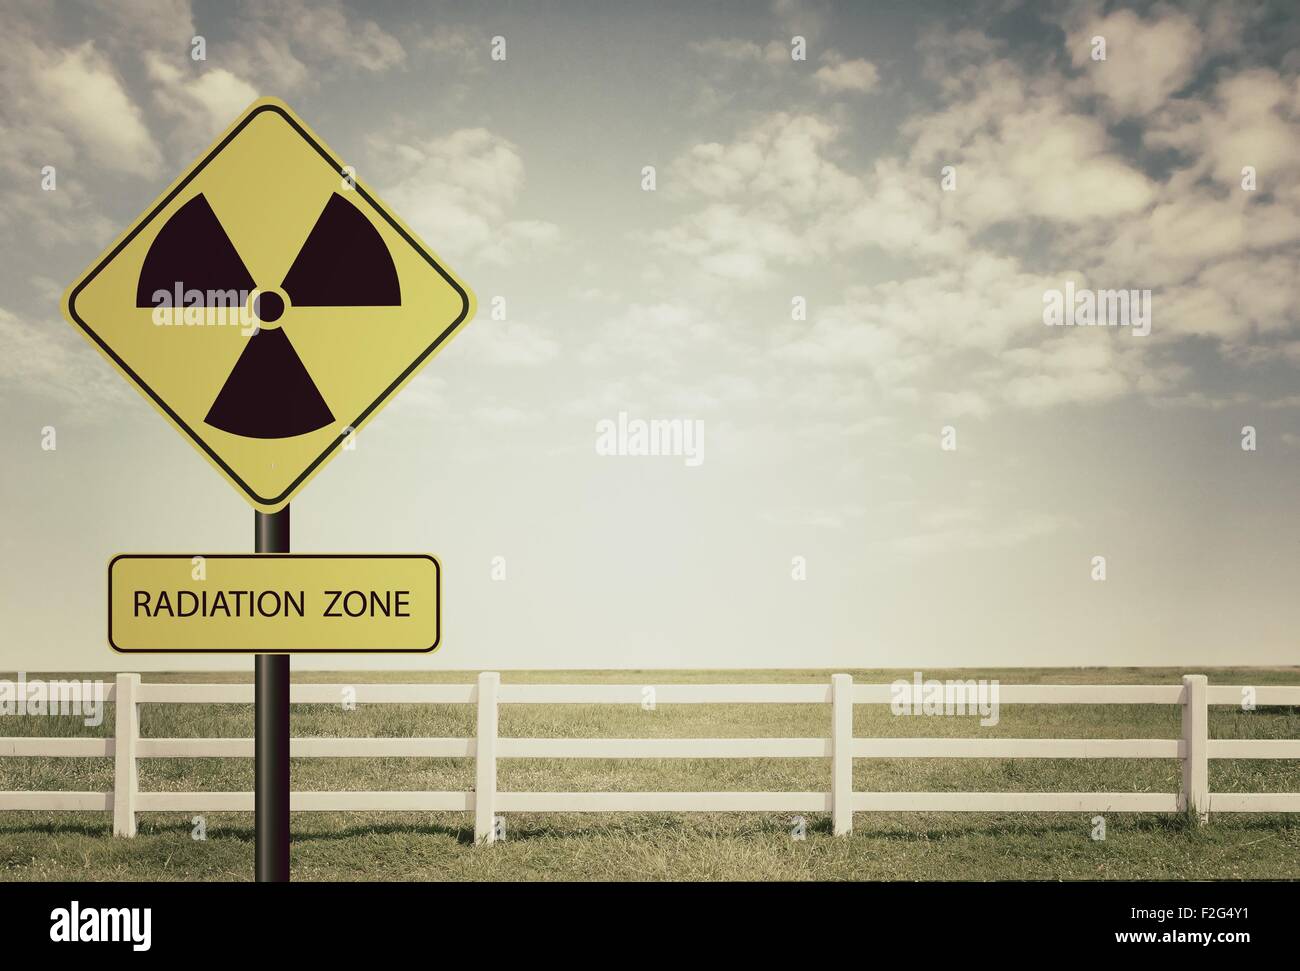 radioaktive Strahlung Warnsymbol mit blauem Himmel Stockfoto